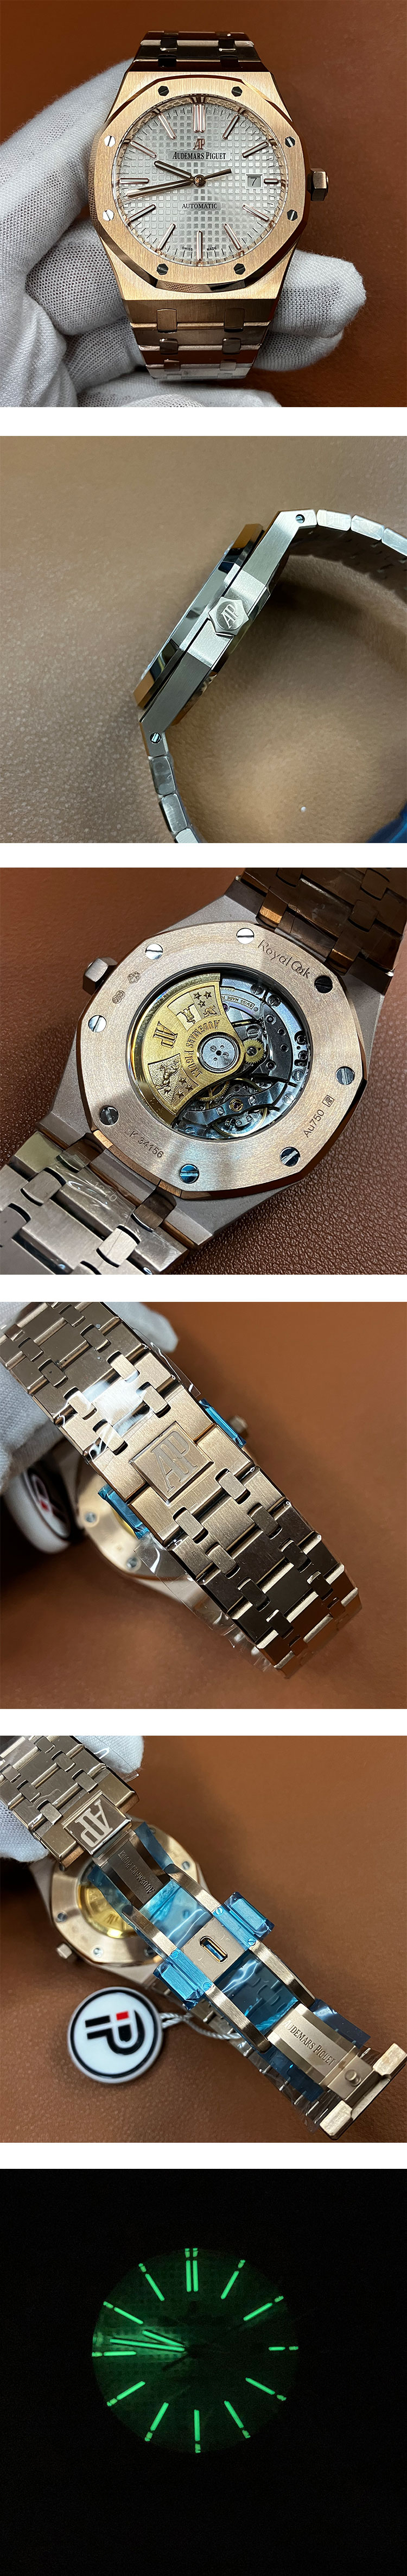 [ IP工場製]最高級スーパーコピー時計 オーデマ・ピゲ ロイヤルオーク 41ｍｍ 15400OR.OO.1220OR.02 シルバー